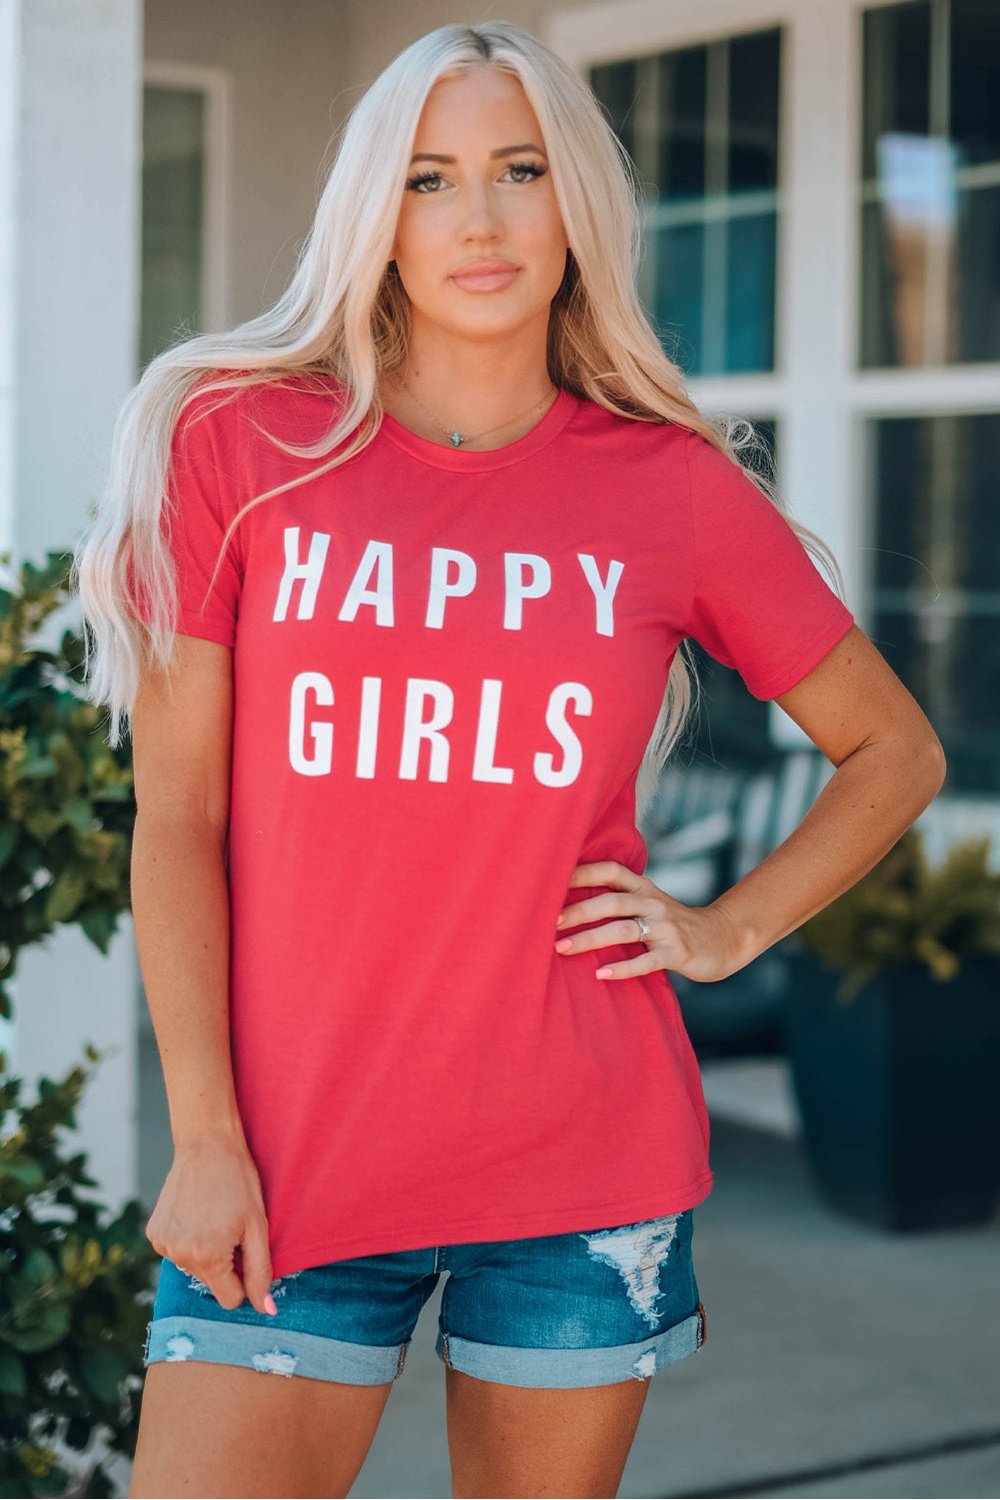 HAPPY GIRLS Short Sleeve Tee Shirt - T-Shirts - FITGGINS